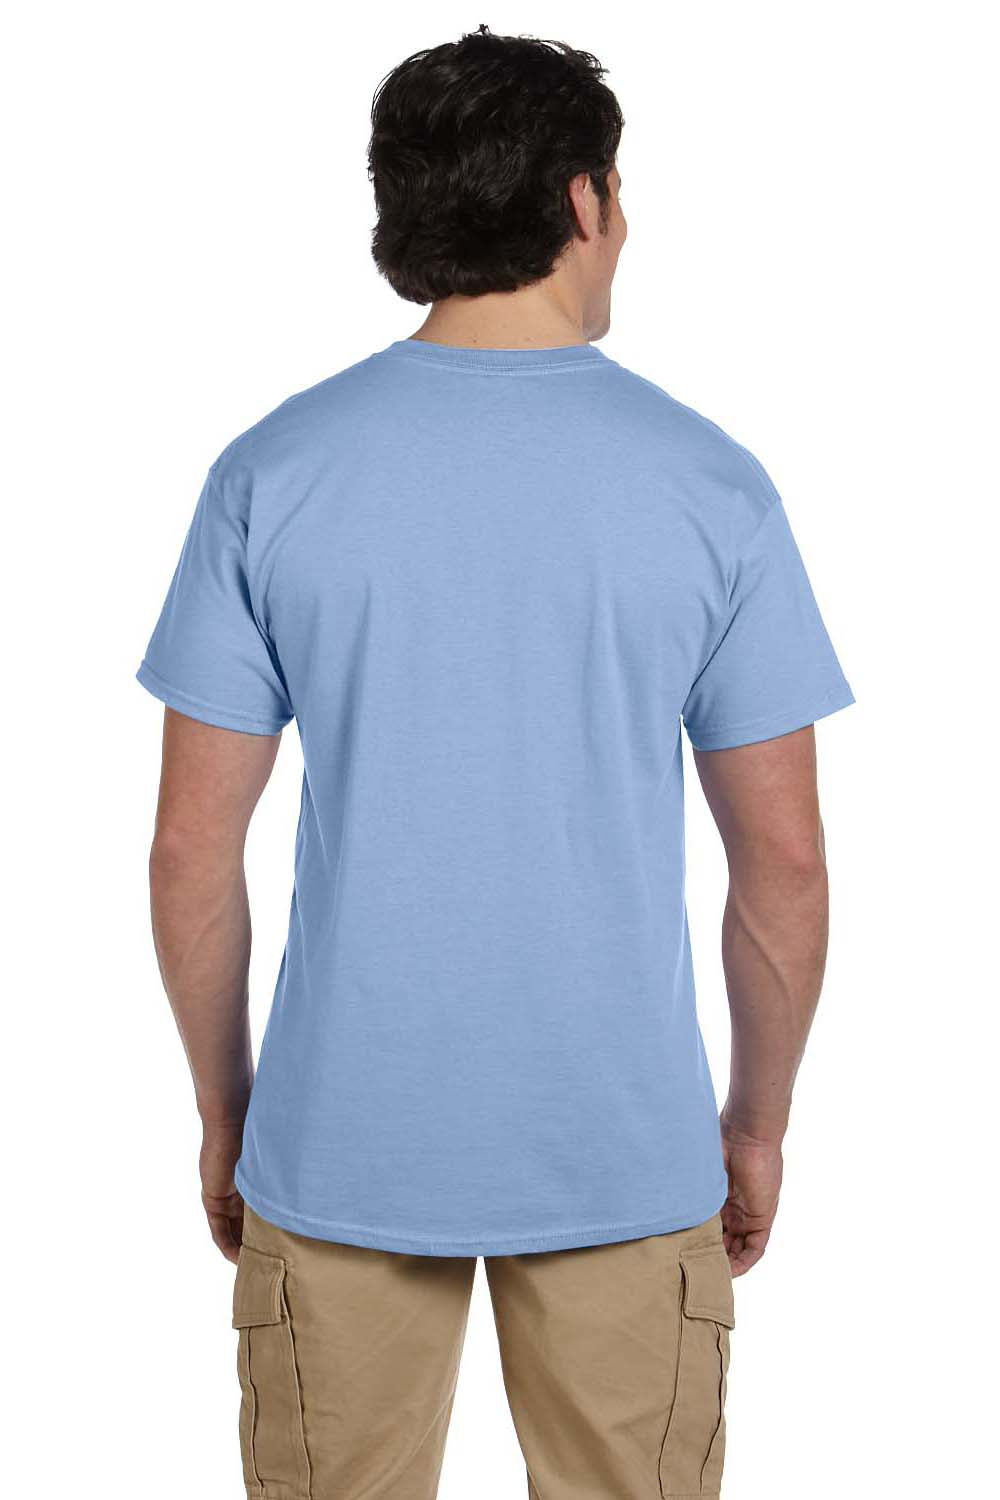 Hanes 5170 Mens EcoSmart Short Sleeve Crewneck T-Shirt Light Blue Back